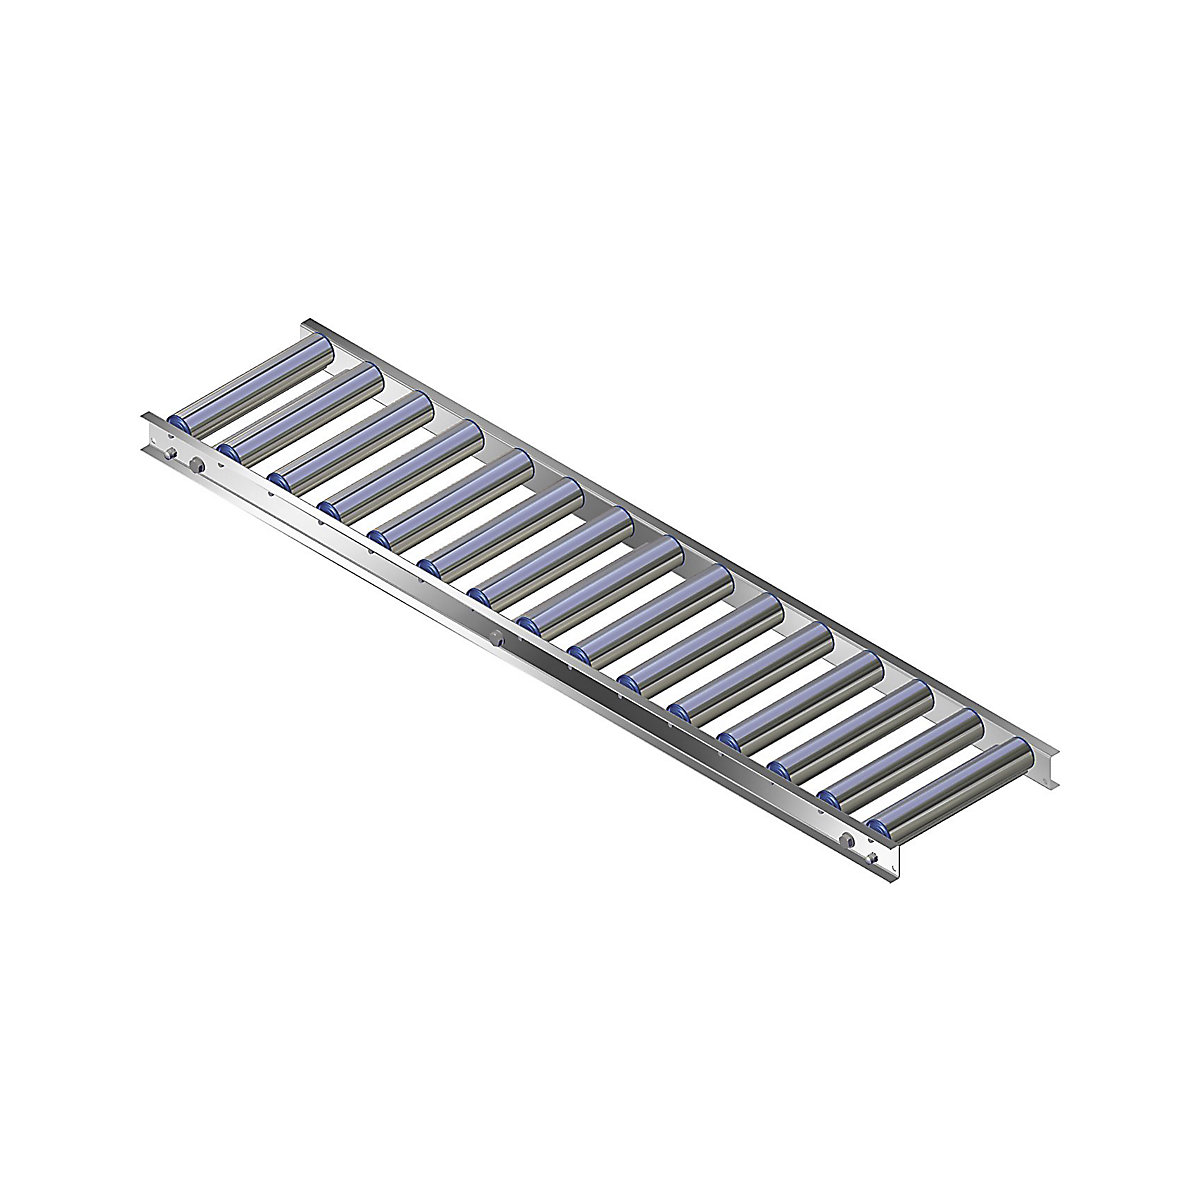 Gura – Light duty roller conveyor, aluminium frame with aluminium rollers, track width 300 mm, axle spacing 100 mm, length 1.5 m